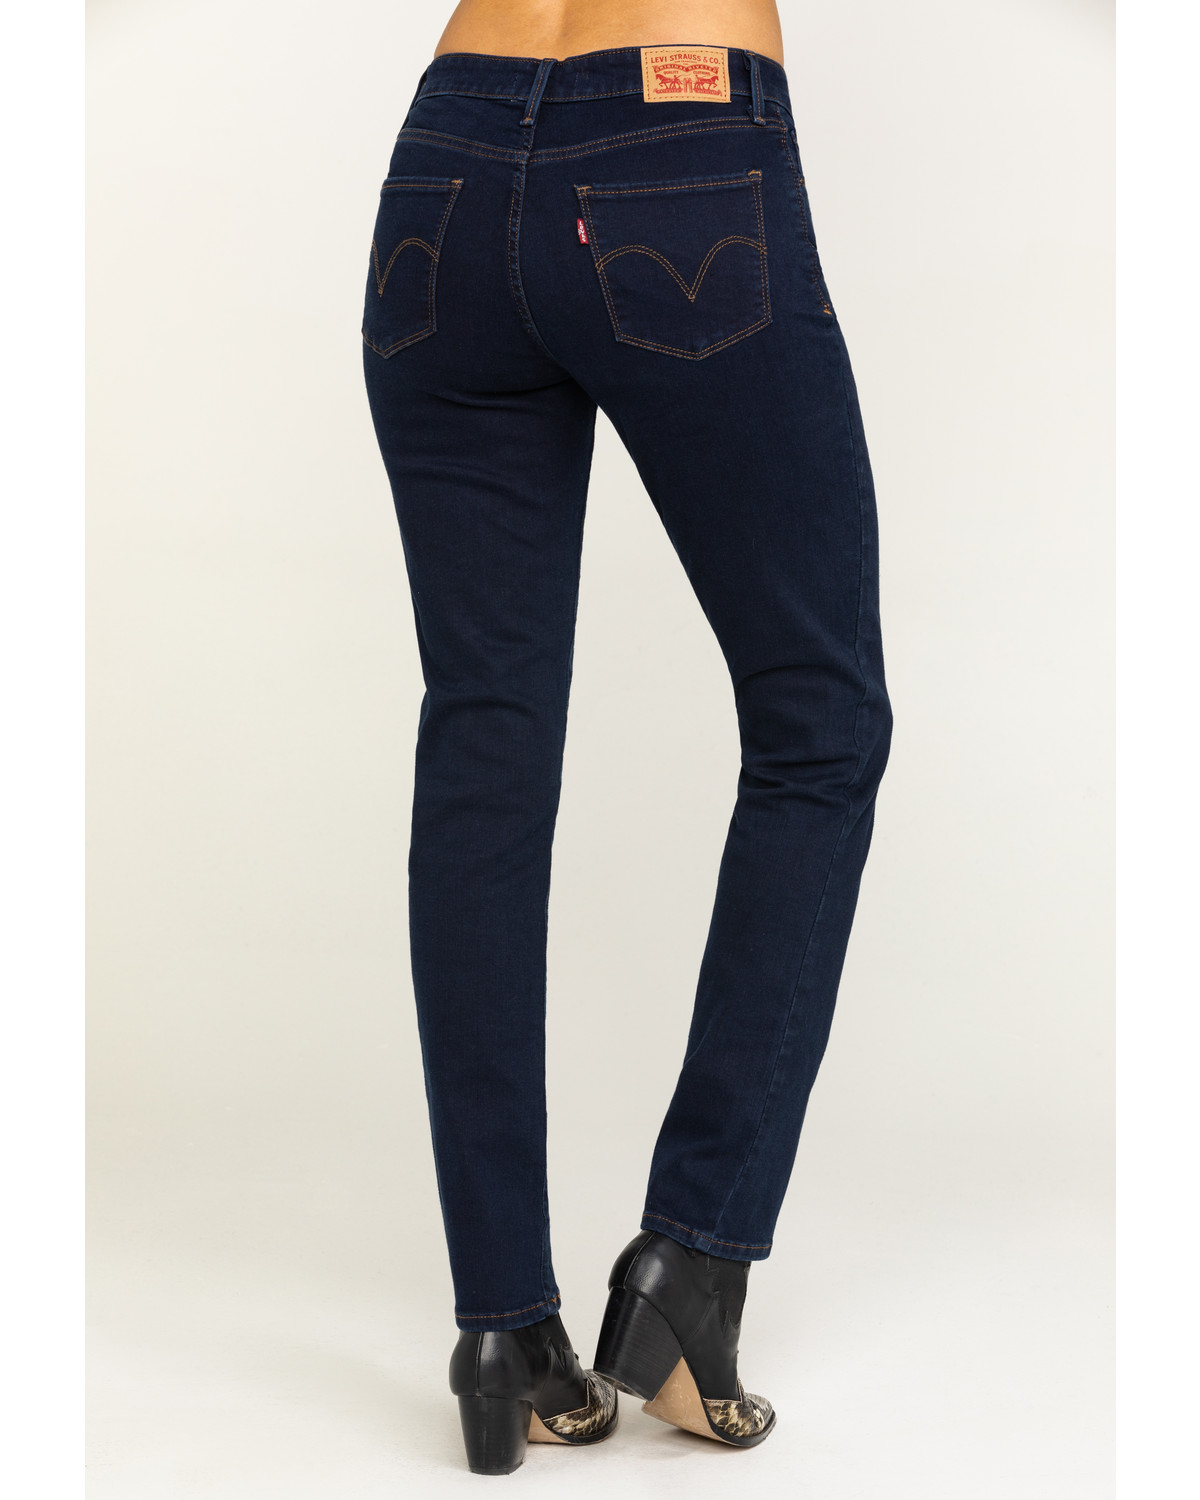 Levi's Womens 535 Denim Studded Mid-Rise Skinny Jeans BHFO 2832 